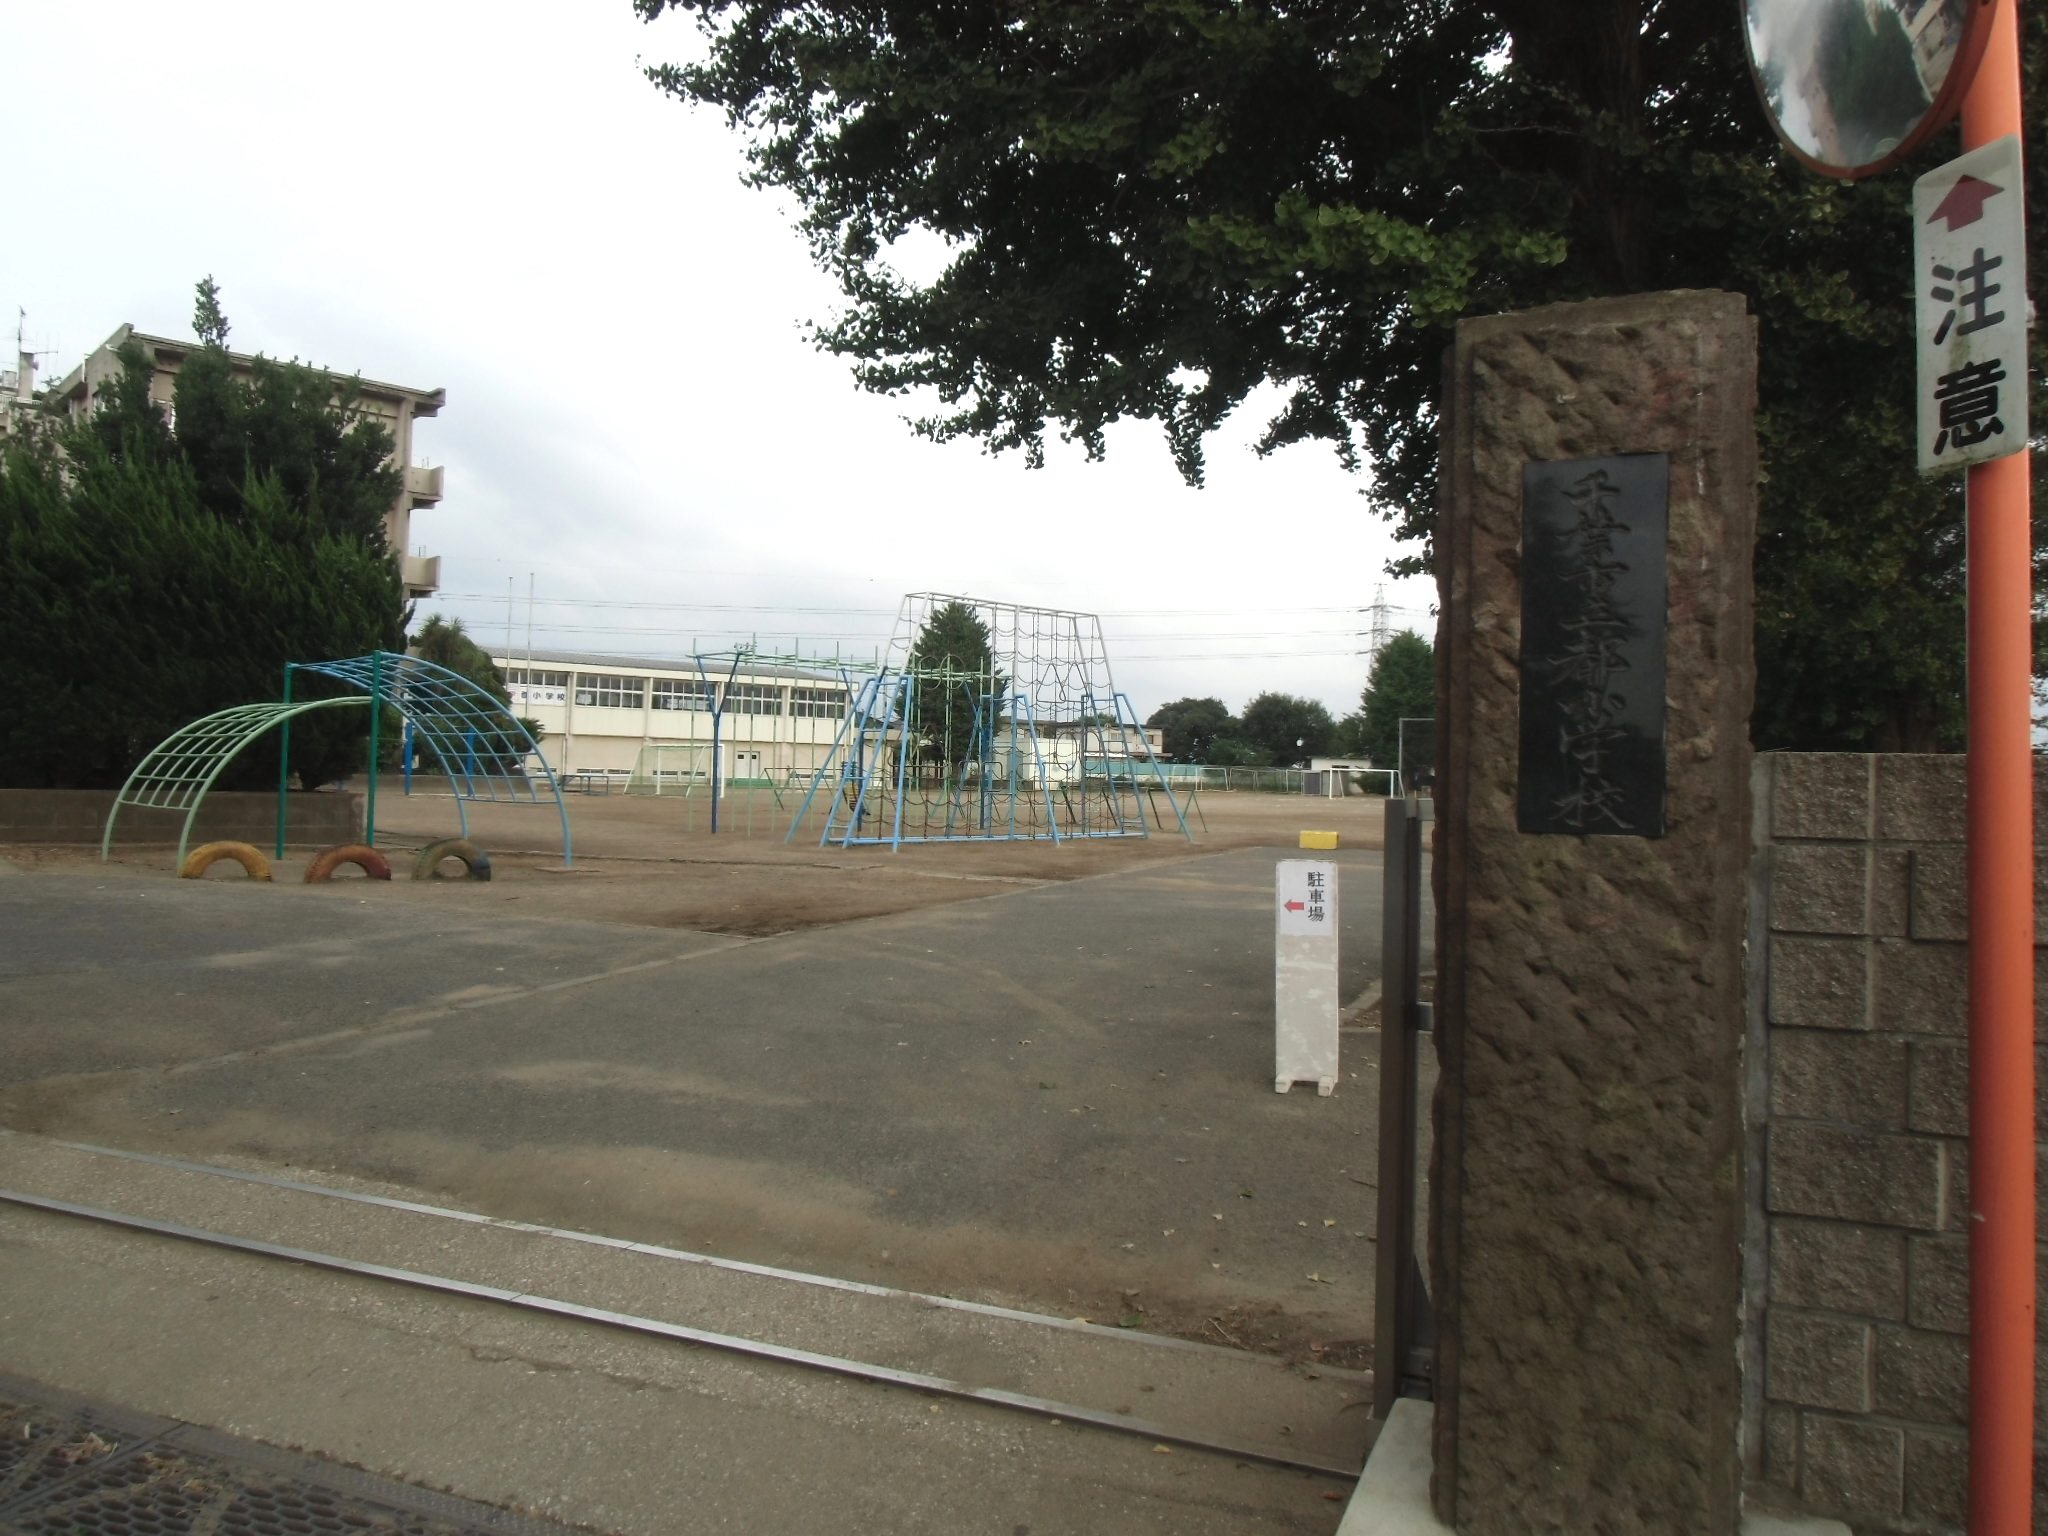 Primary school. 864m until the Chiba Municipal Metropolitan elementary school (elementary school)